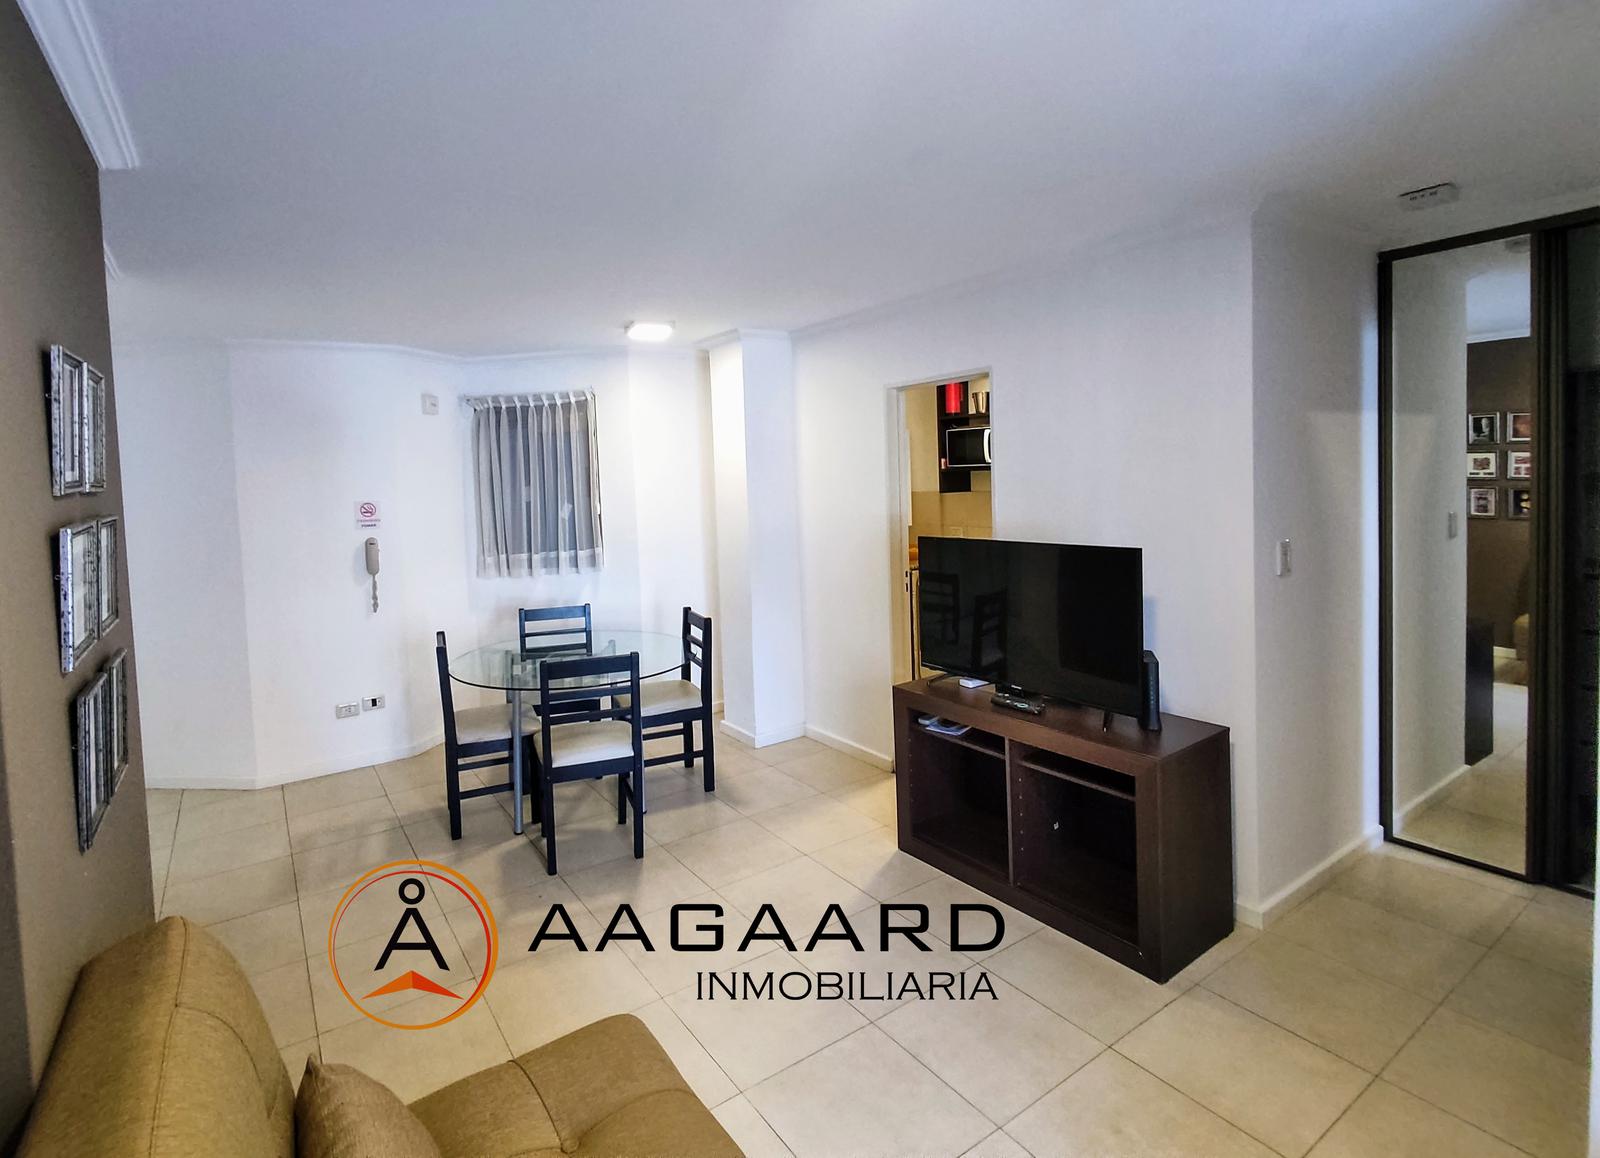 #4924011 | Sale | Apartment | Nueva Cordoba (AAGAARD INMOBILIARIA)